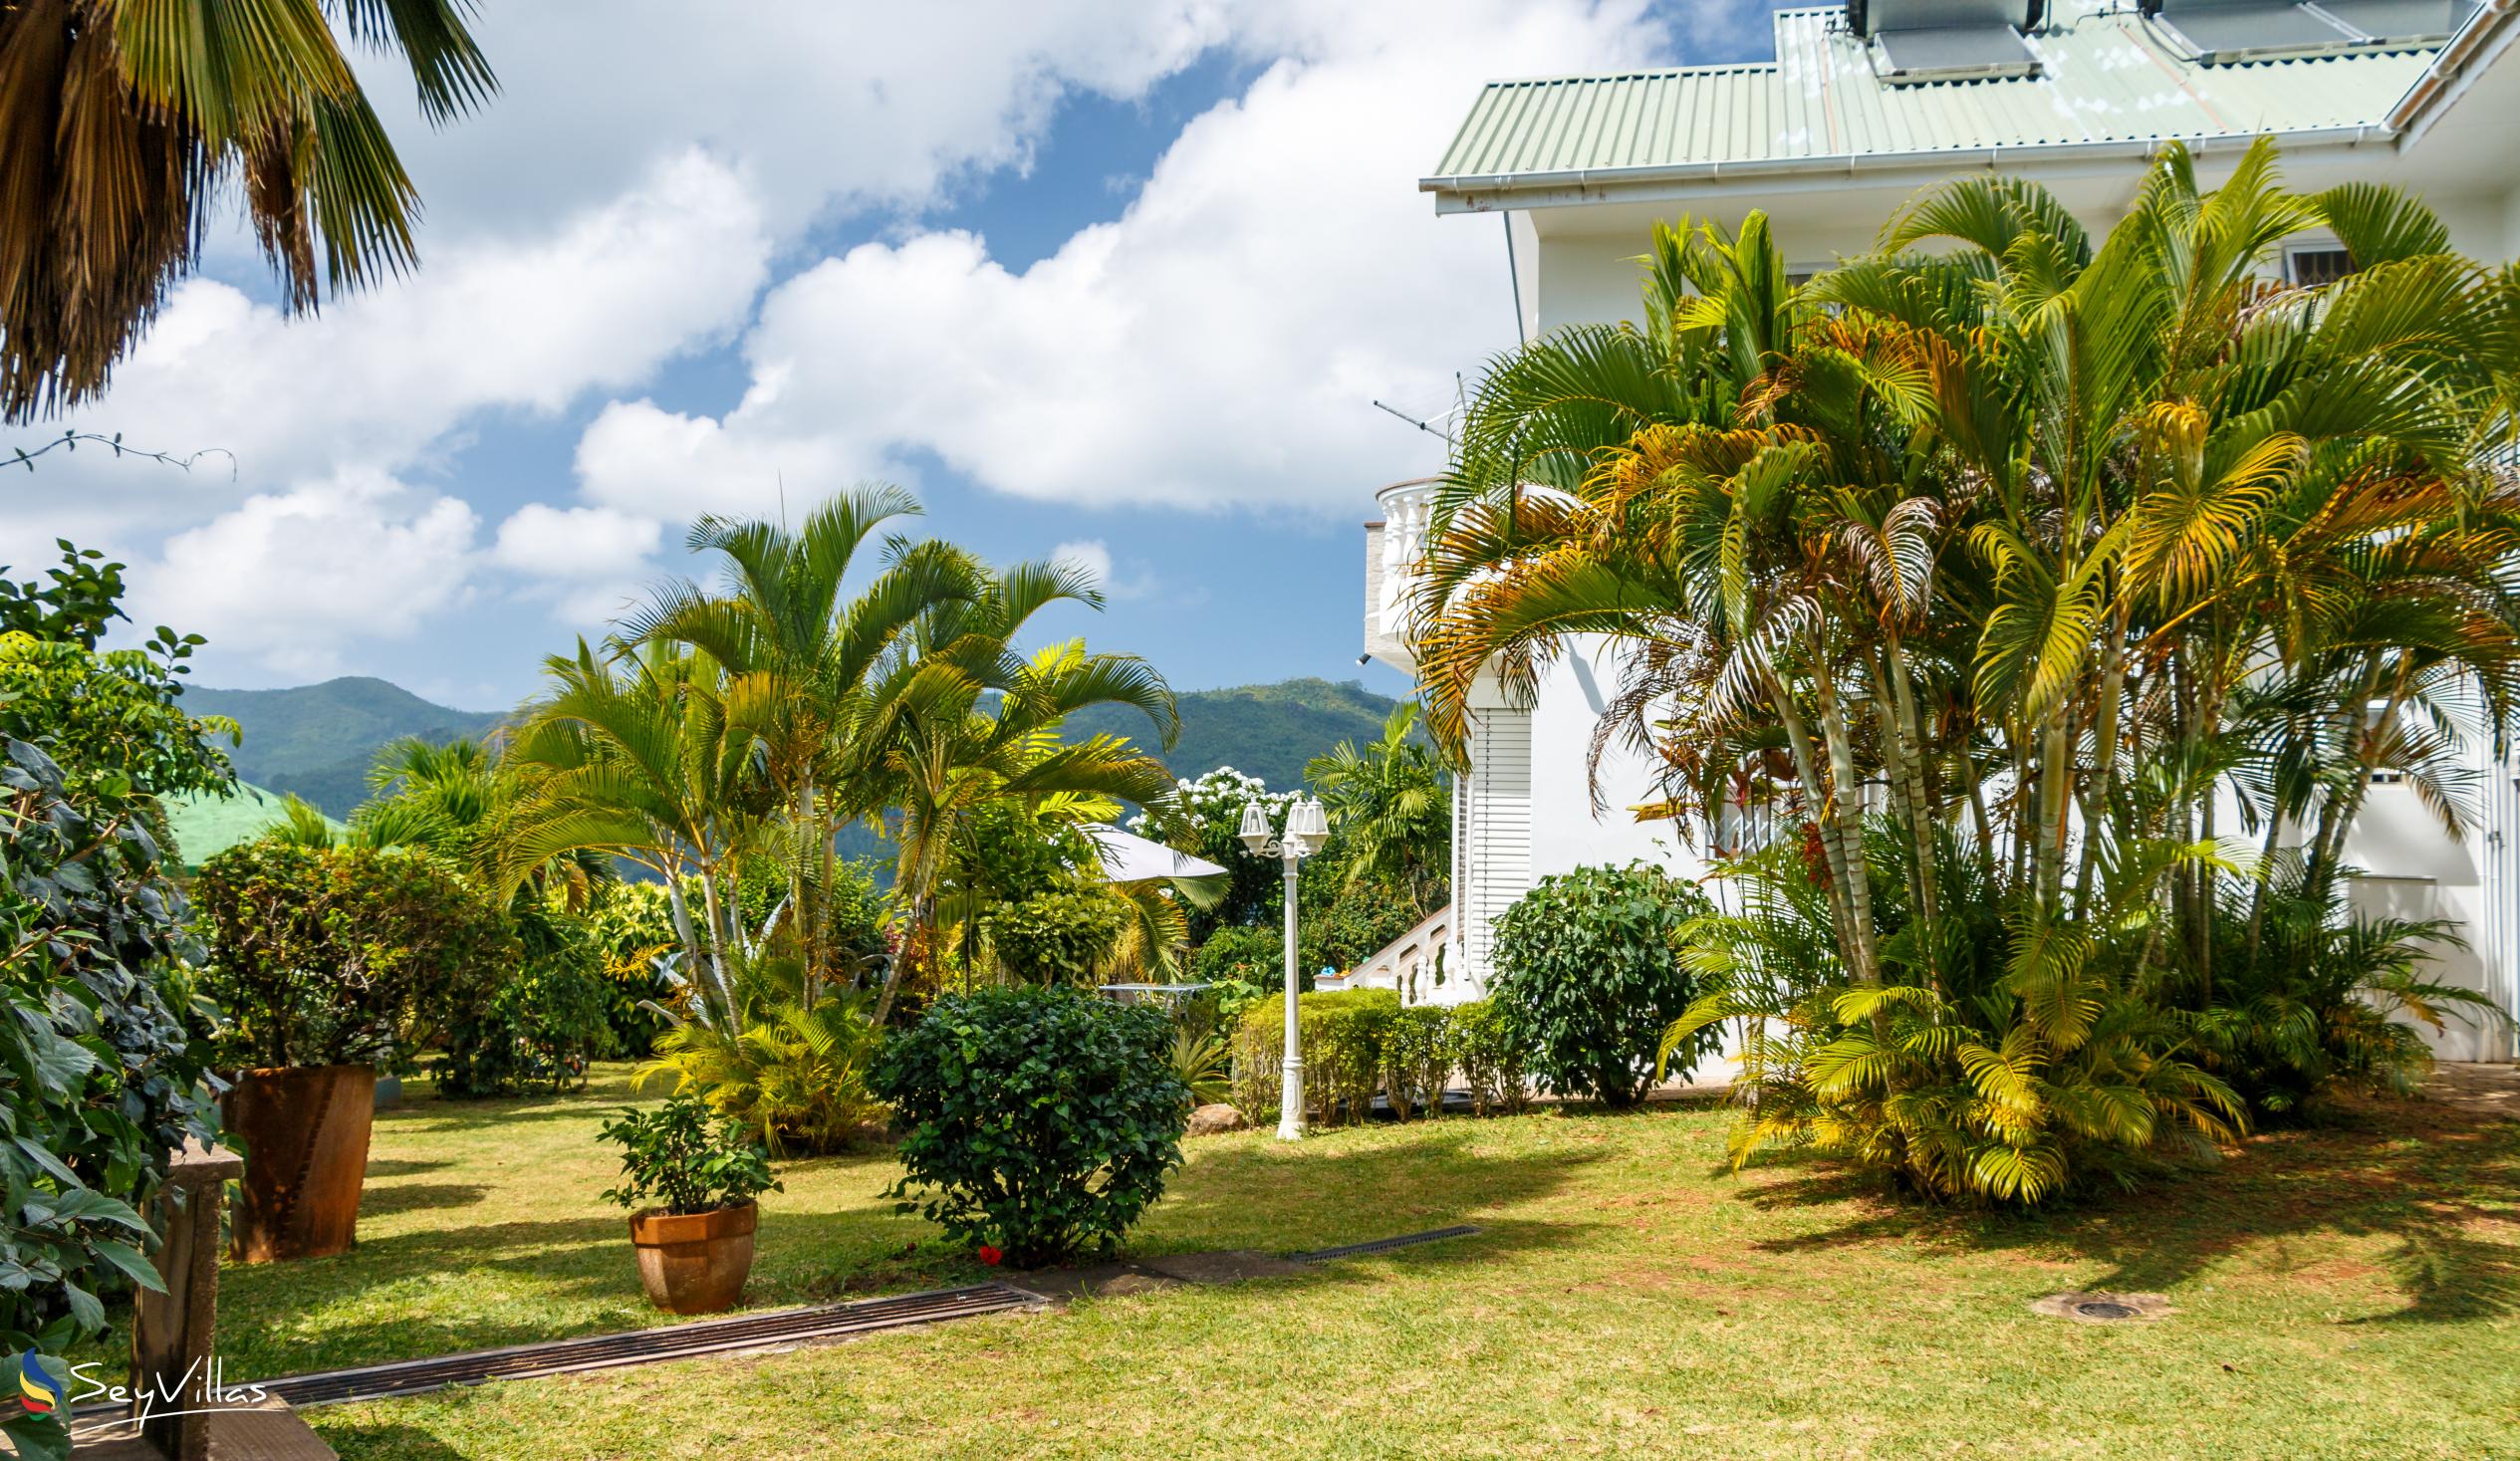 Foto 4: Villa Bel Age - Aussenbereich - Mahé (Seychellen)